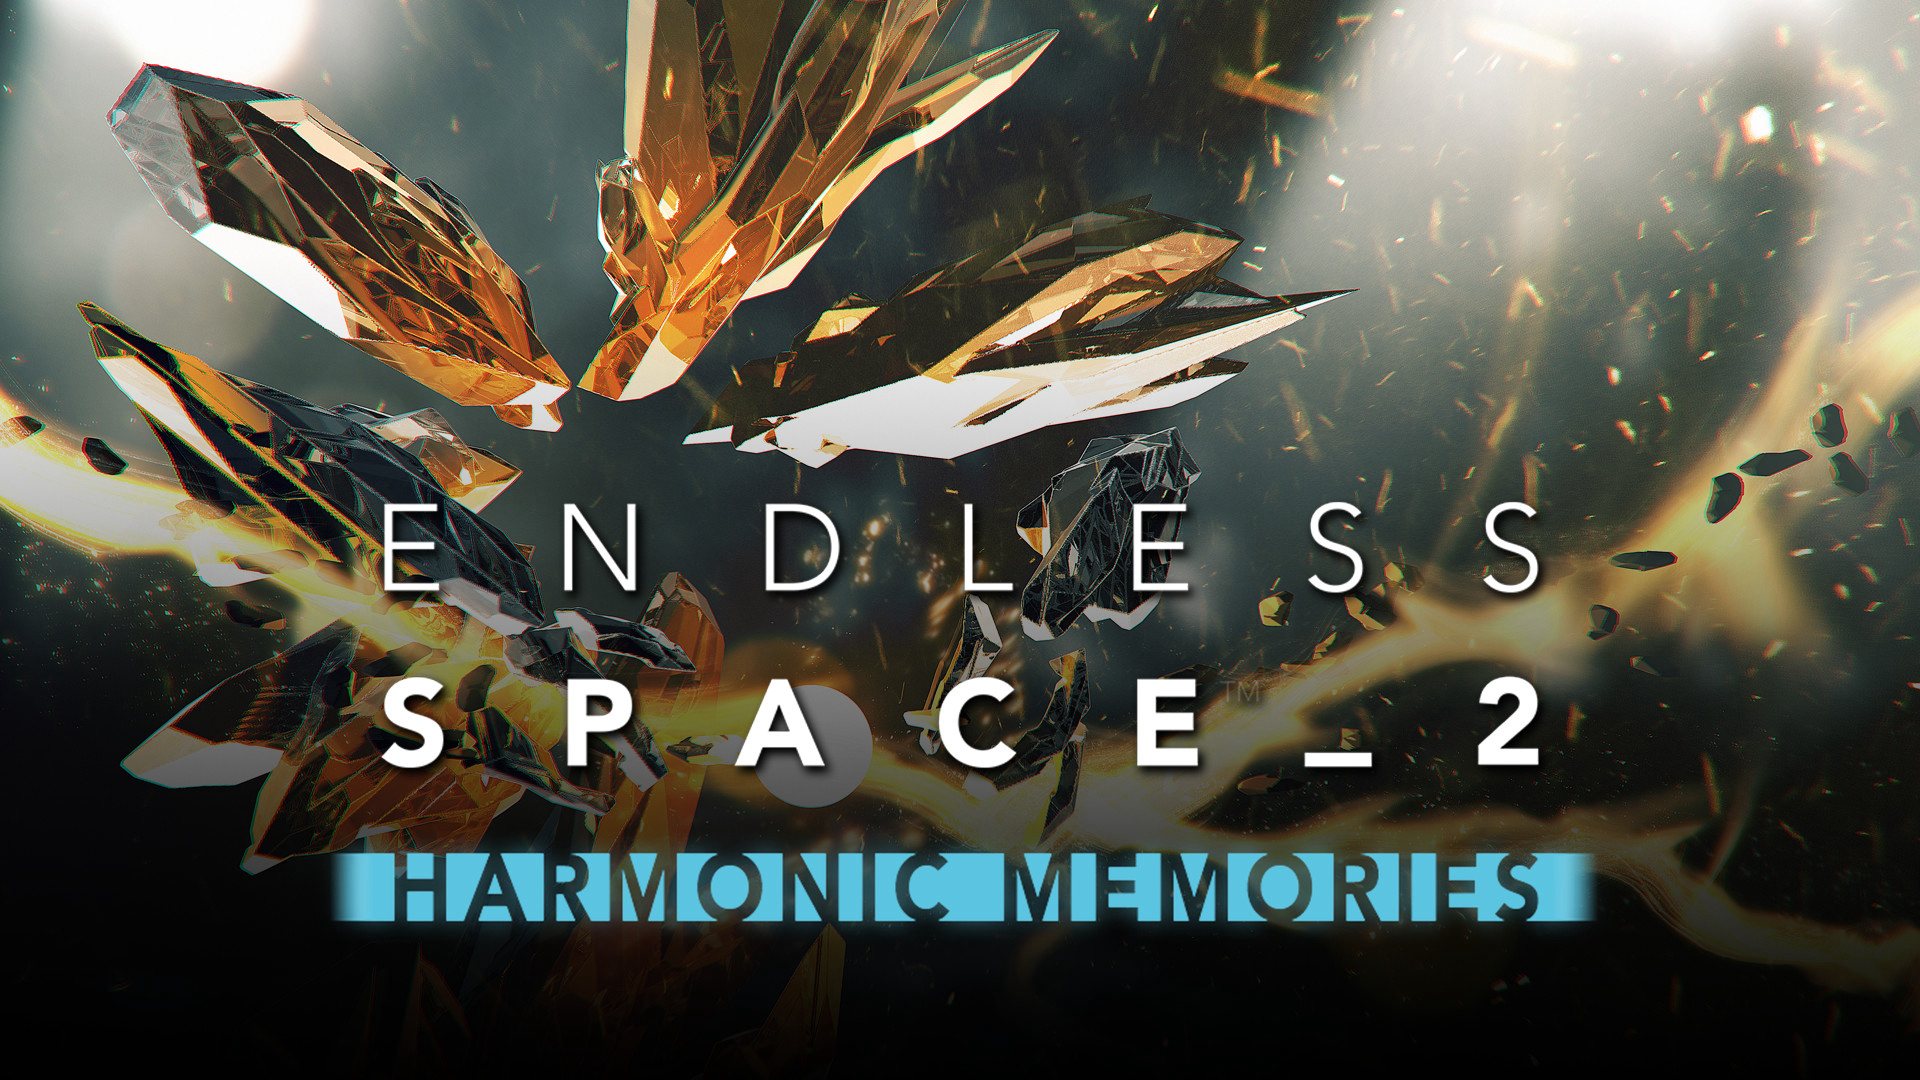 Endless Space 2 - Harmonic Memories DLC Steam CD Key 1.45 $